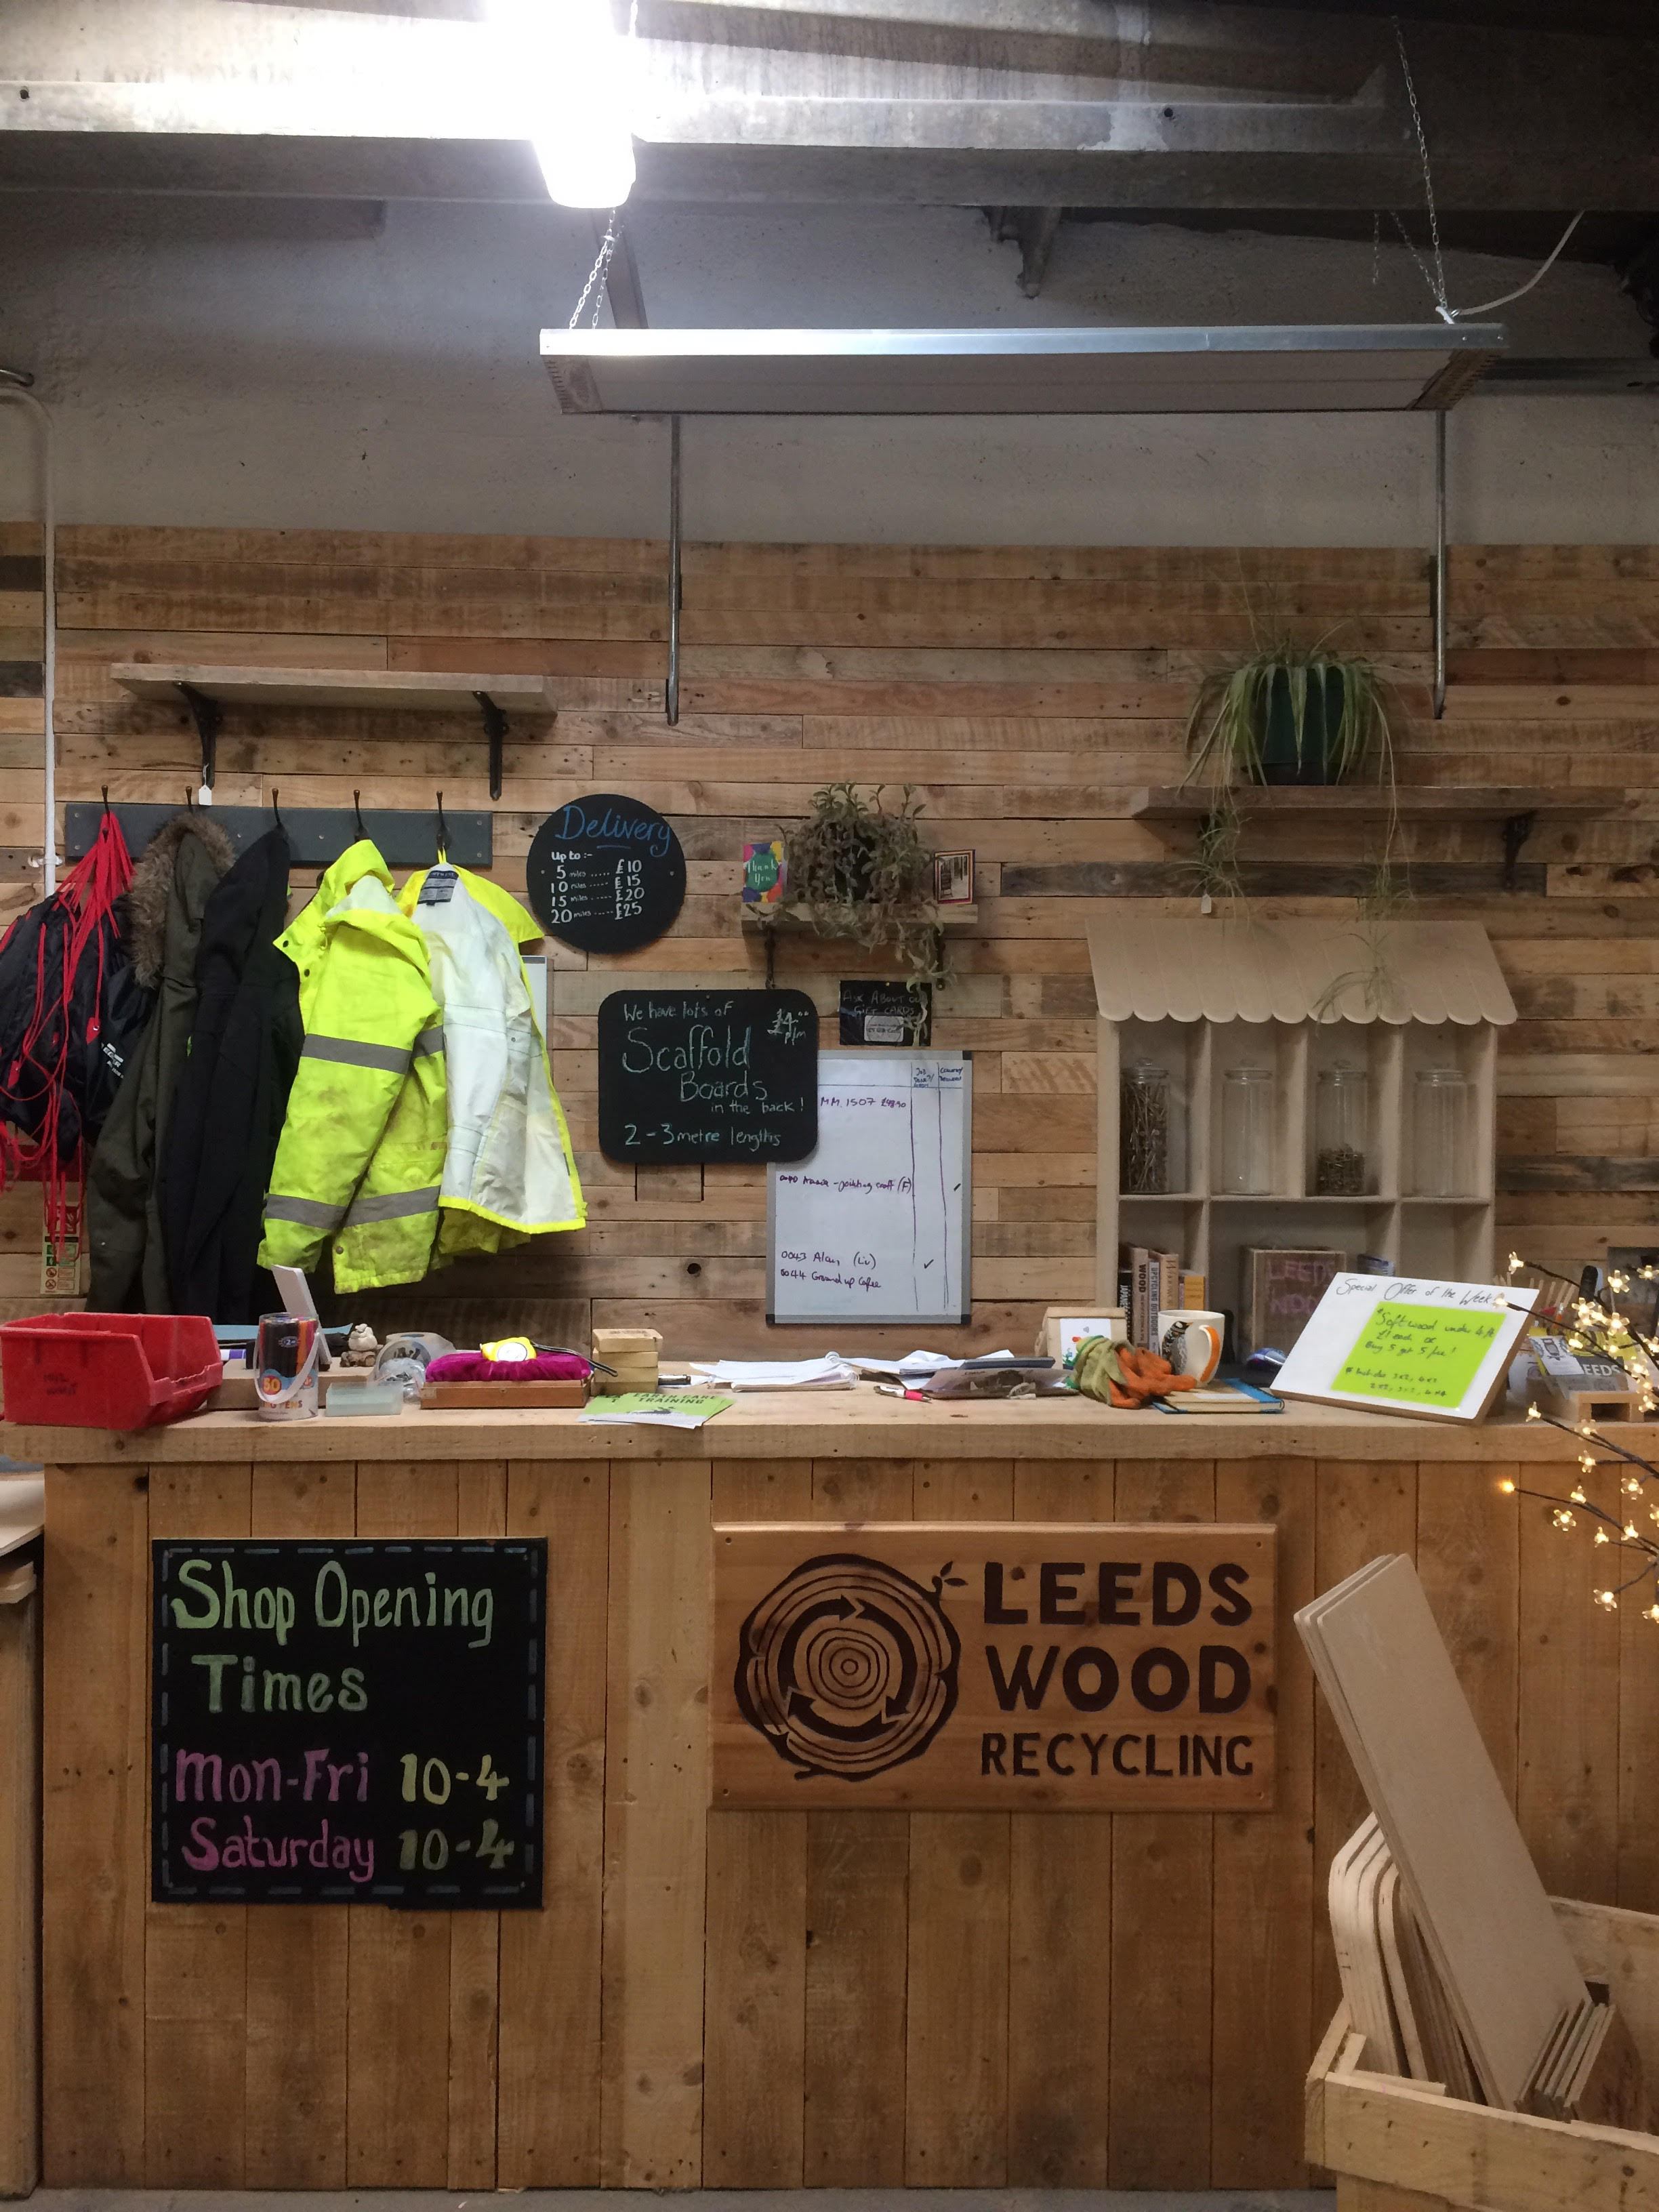 Leeds wood Recycling